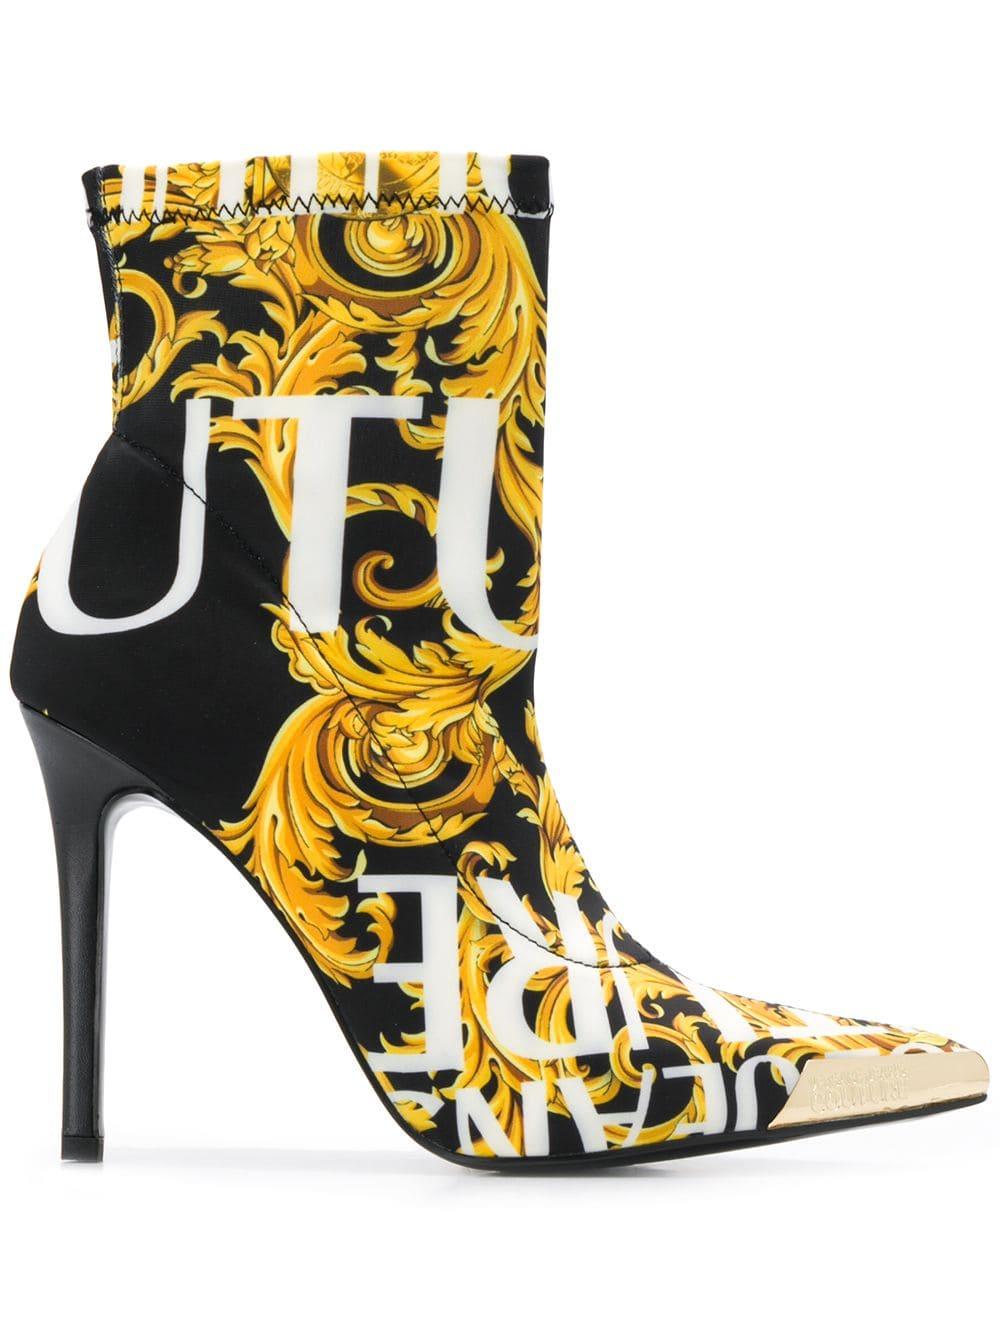 Versace Jeans Denim Baroque Print Boots in Yellow - Lyst